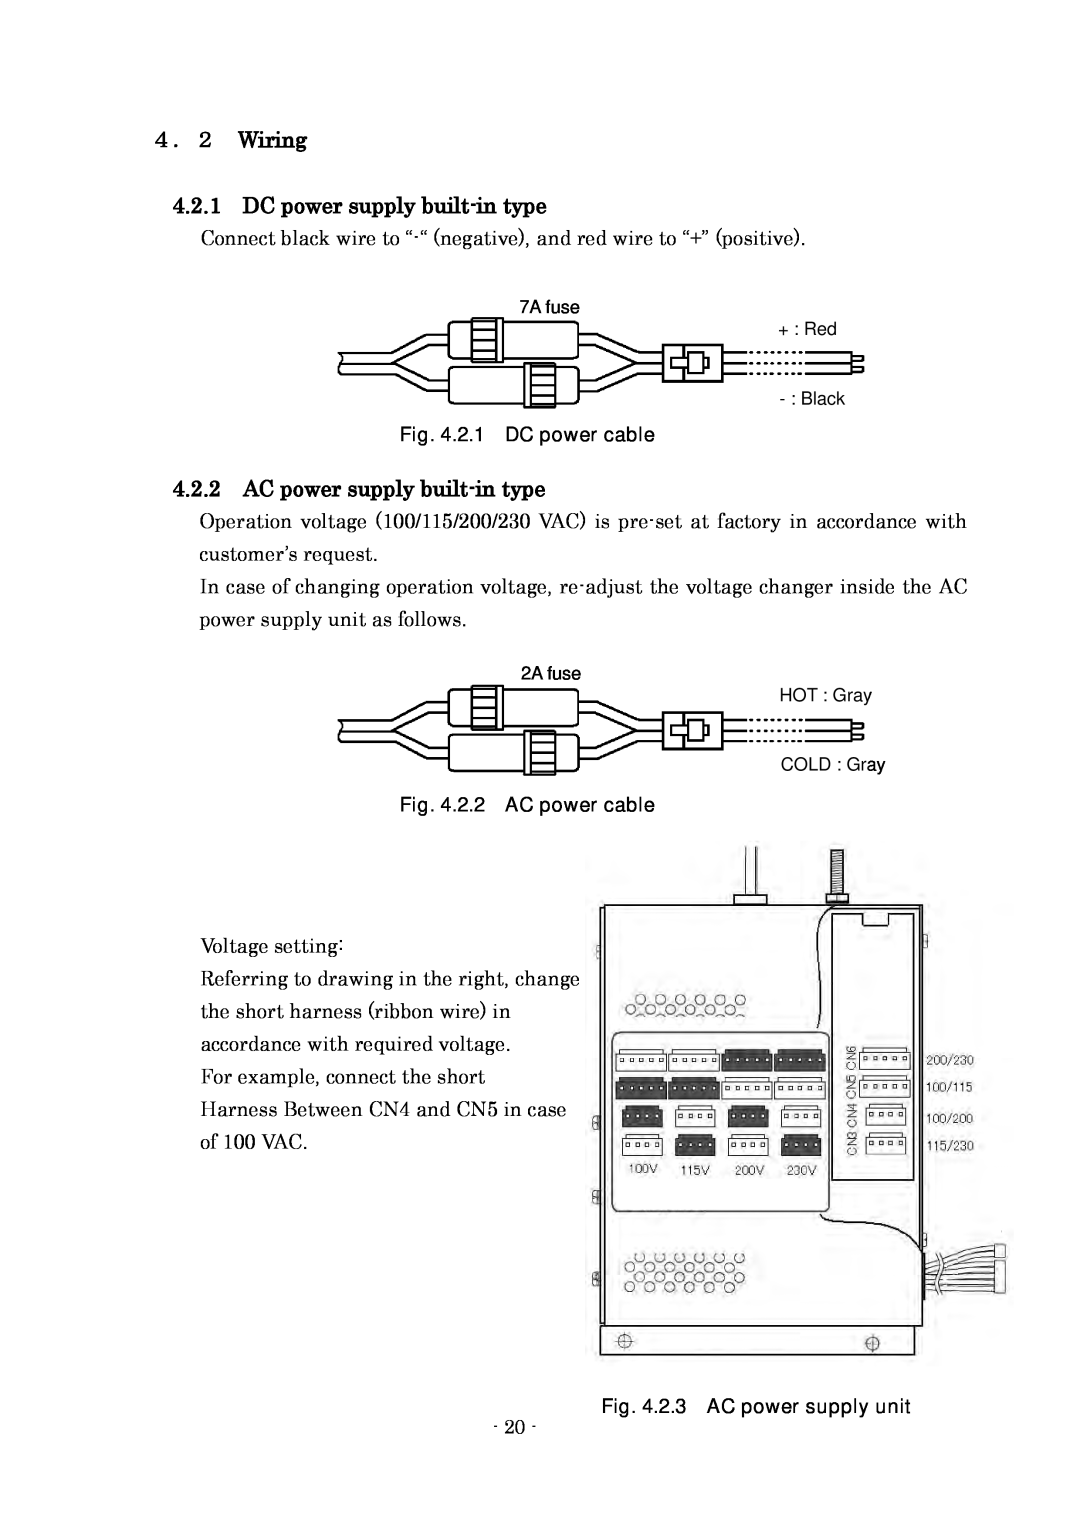 Furuno FAX-410 manual ４．２ Wiring 4.2.1 DC power supply built-in type, AC power supply built-in type, 2.1 DC power cable 